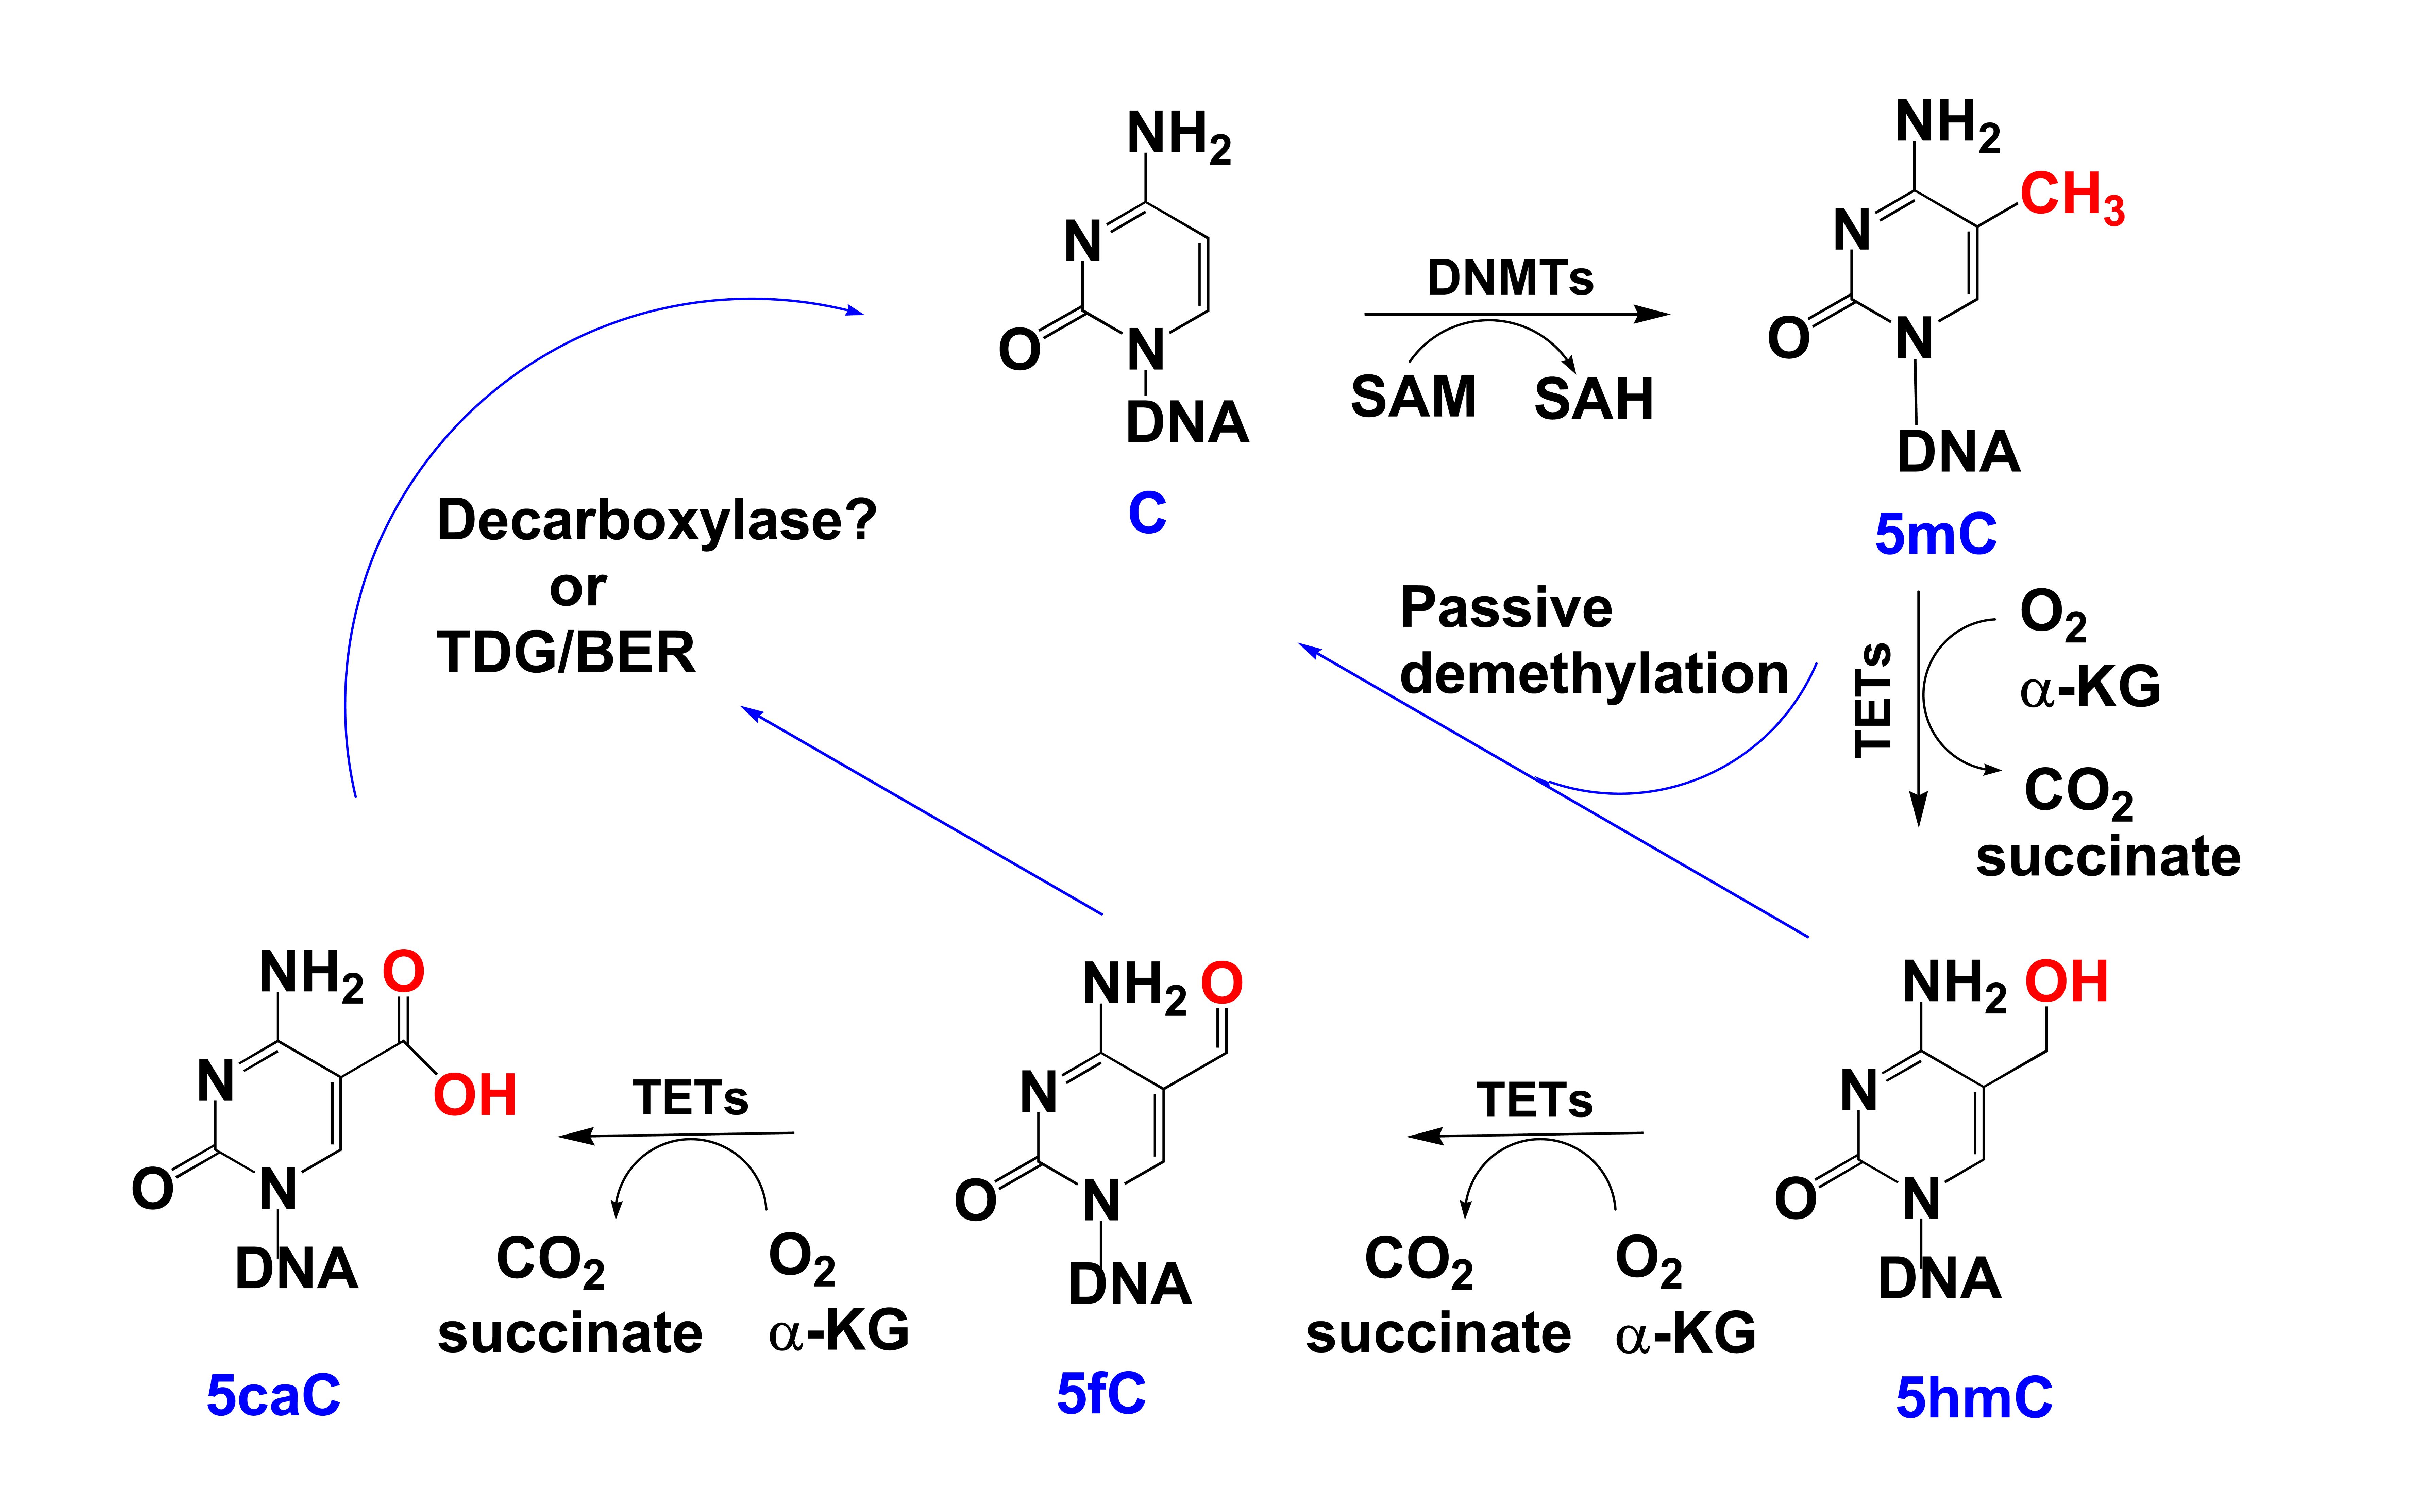 Successive oxidation reactions of 5mC.